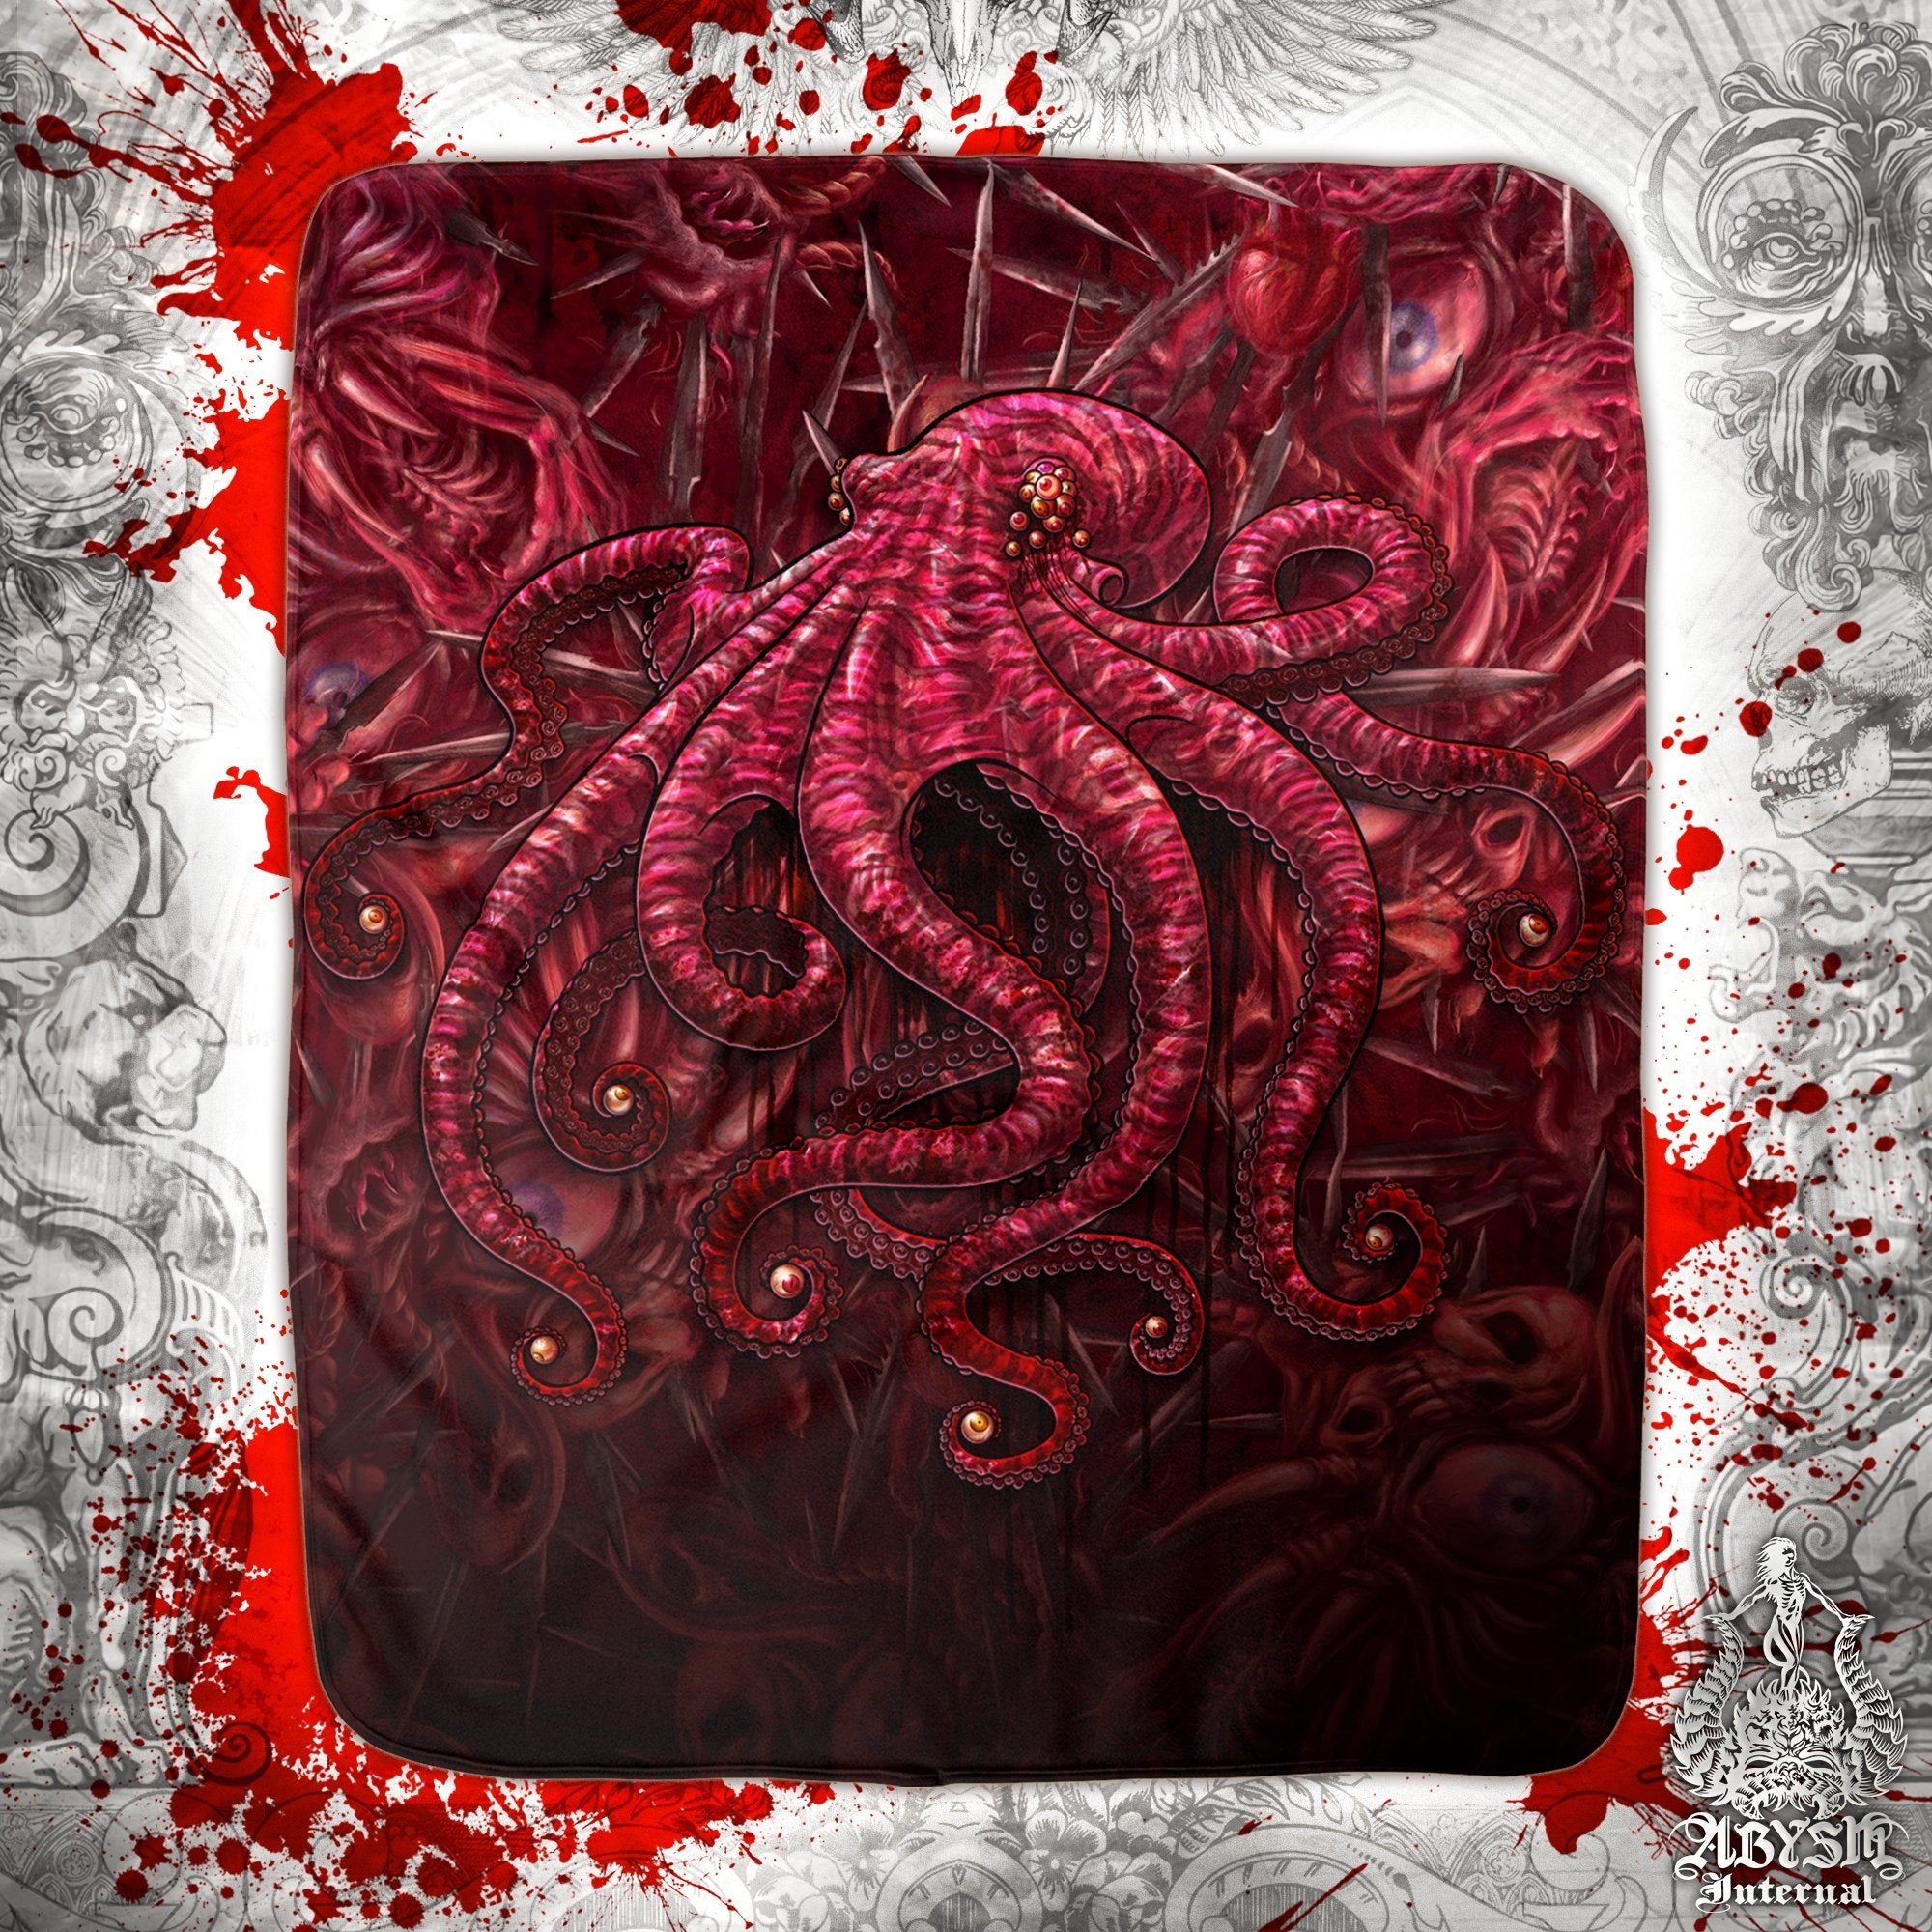 Monster Throw Fleece Blanket, Halloween Gift, Horror Home Decor - Eyeballs Octopus, Gore and Blood - Abysm Internal